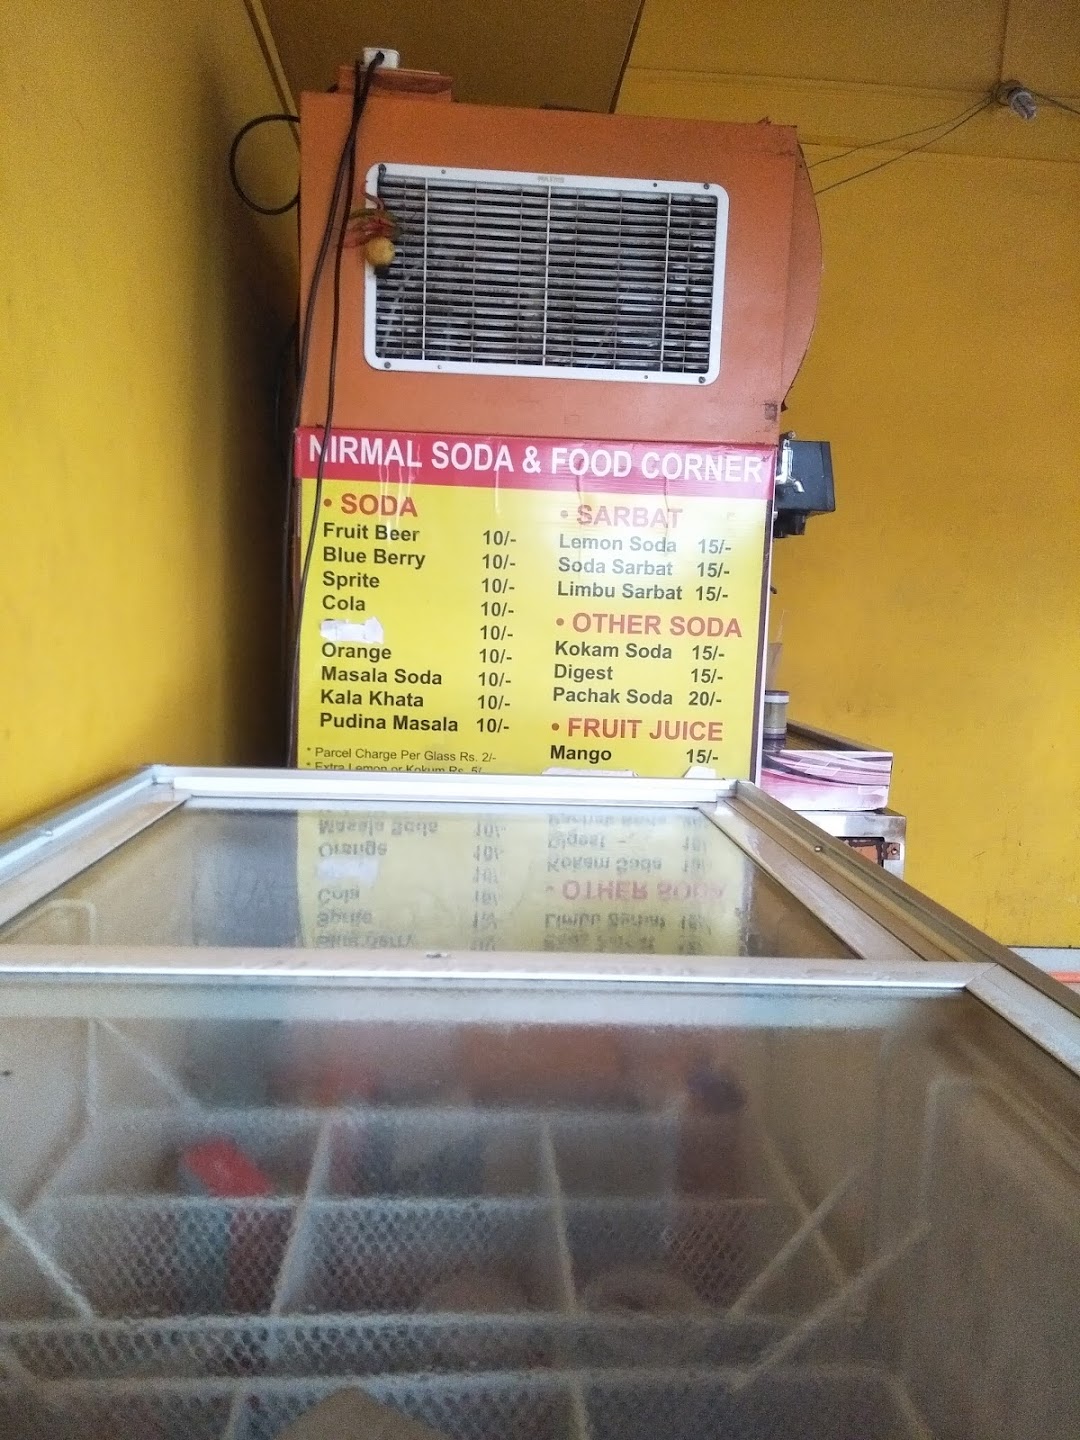 Nirmal Soda & Food Corner